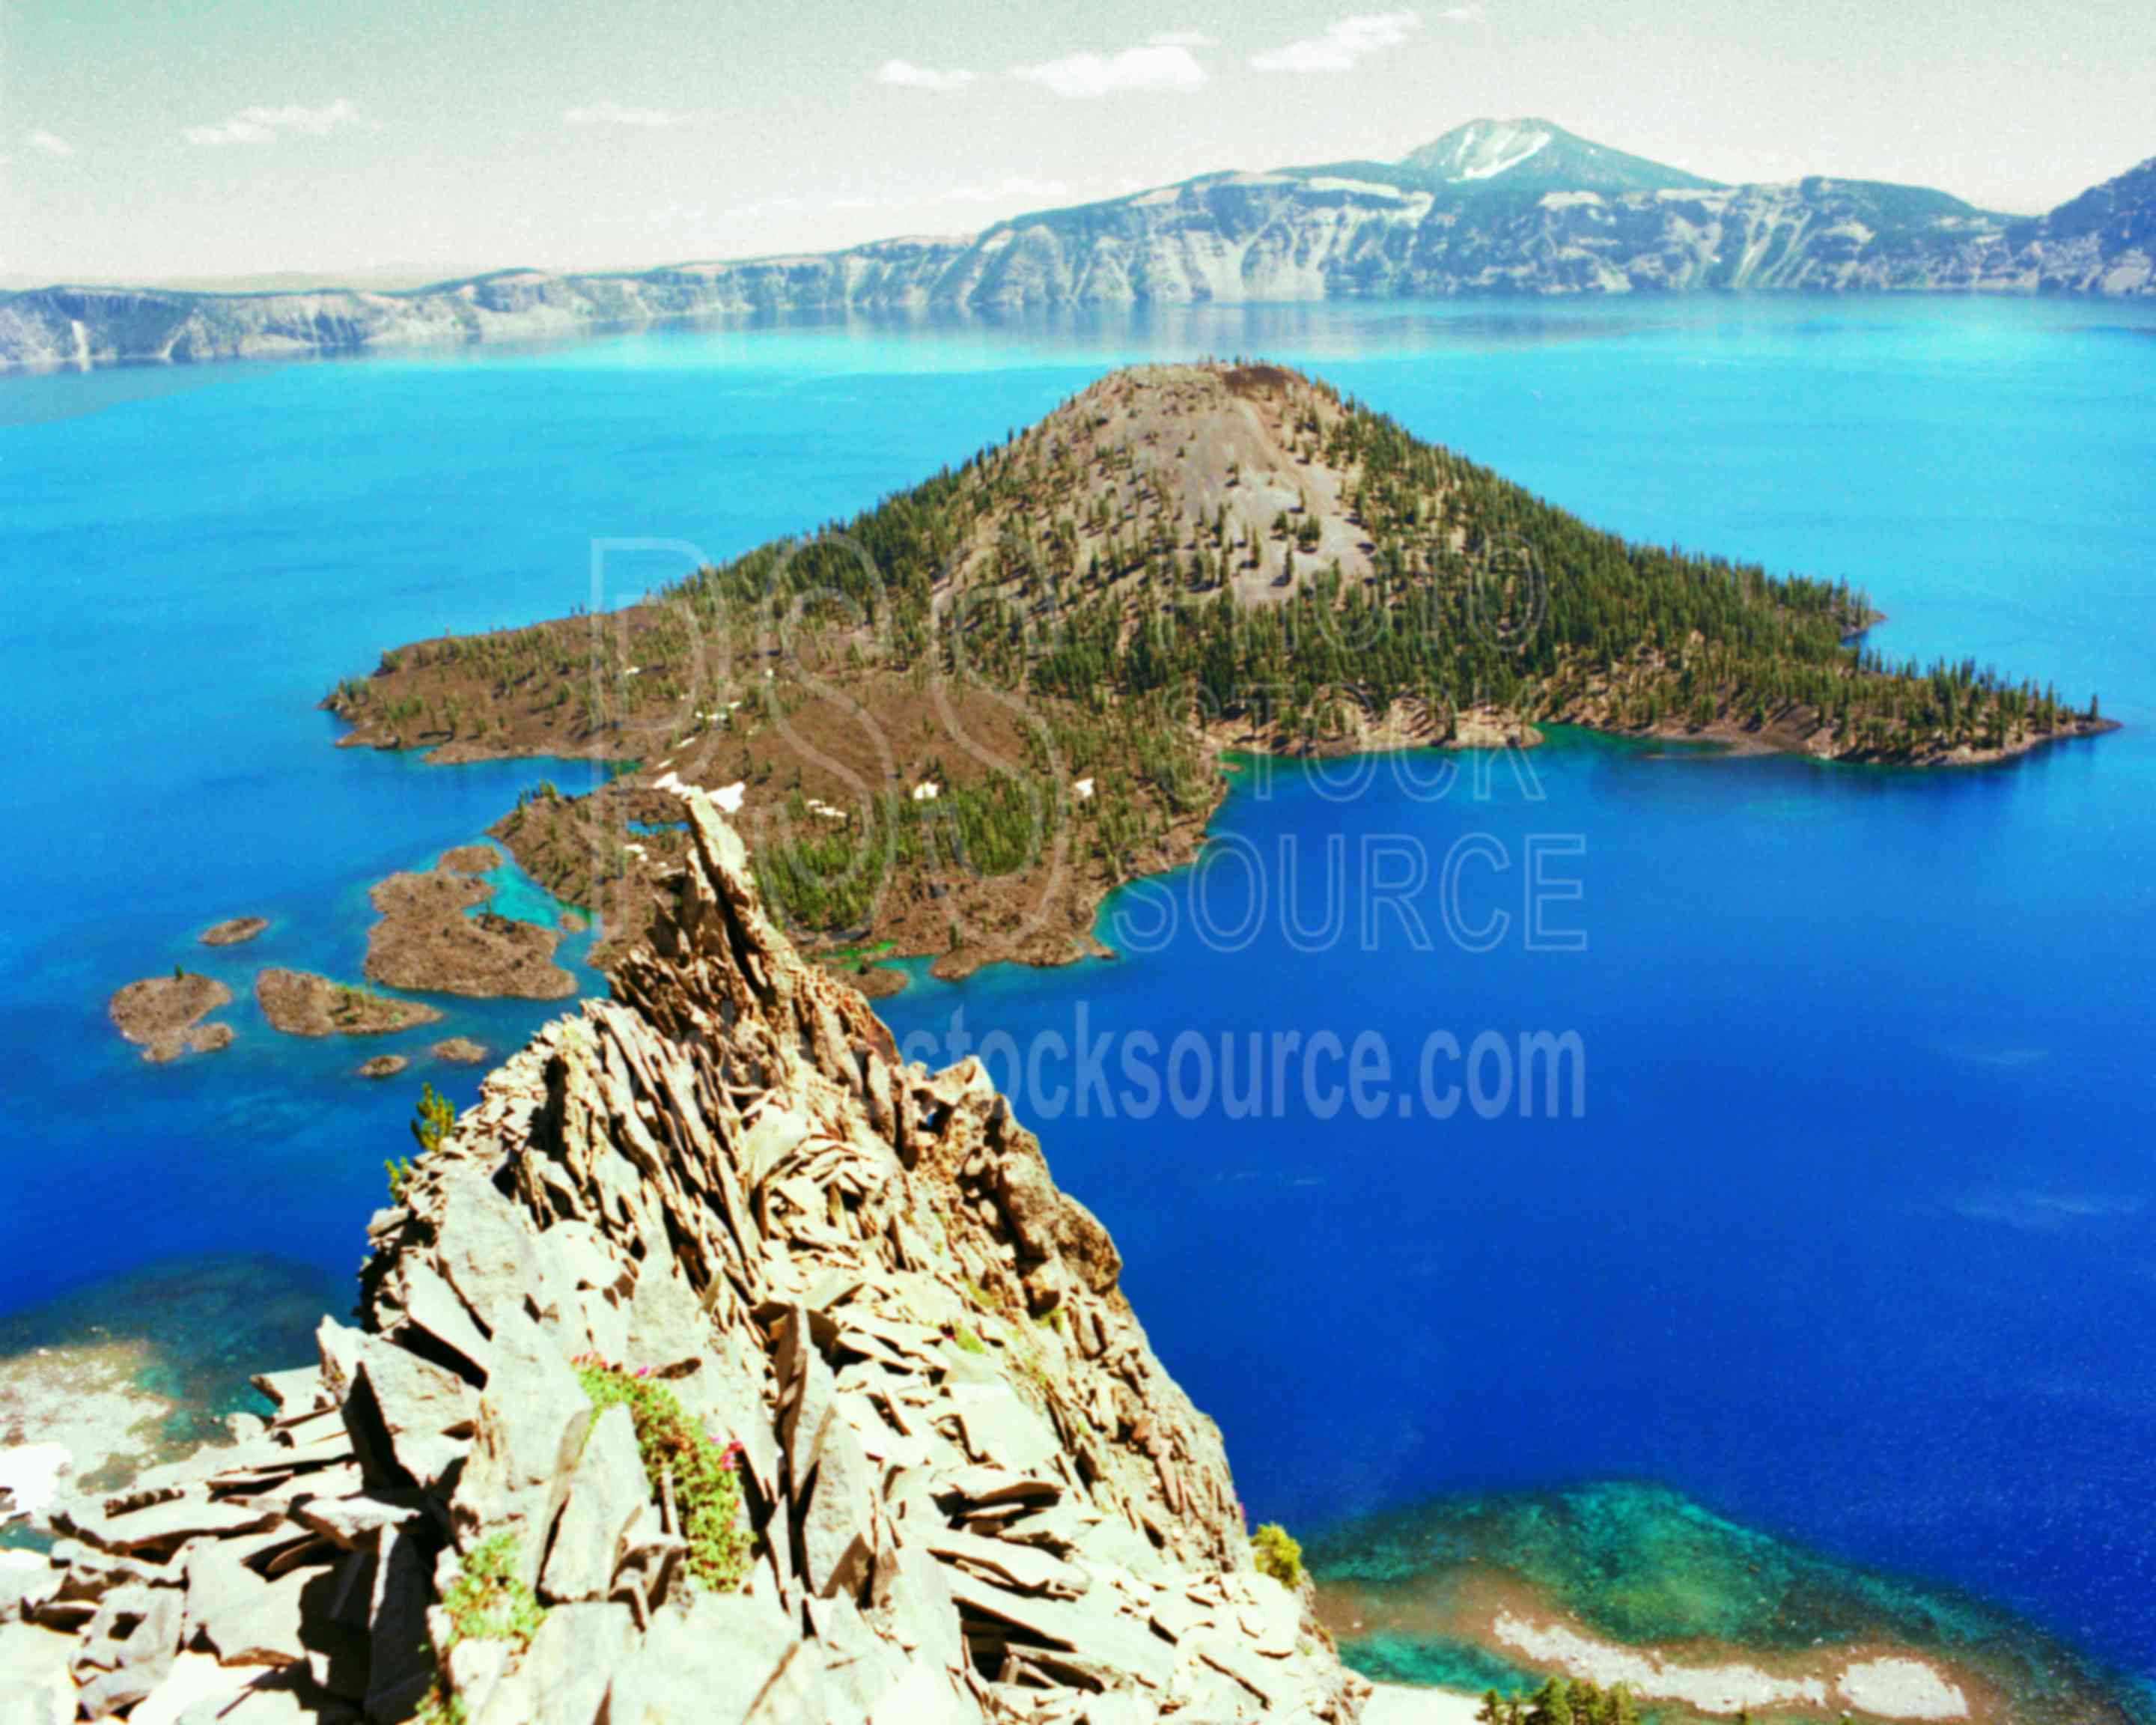 Crater Lake Wizard Island,caldera,crater lake,island,mount scott,wizard island,usas,lakes rivers,national park,nature